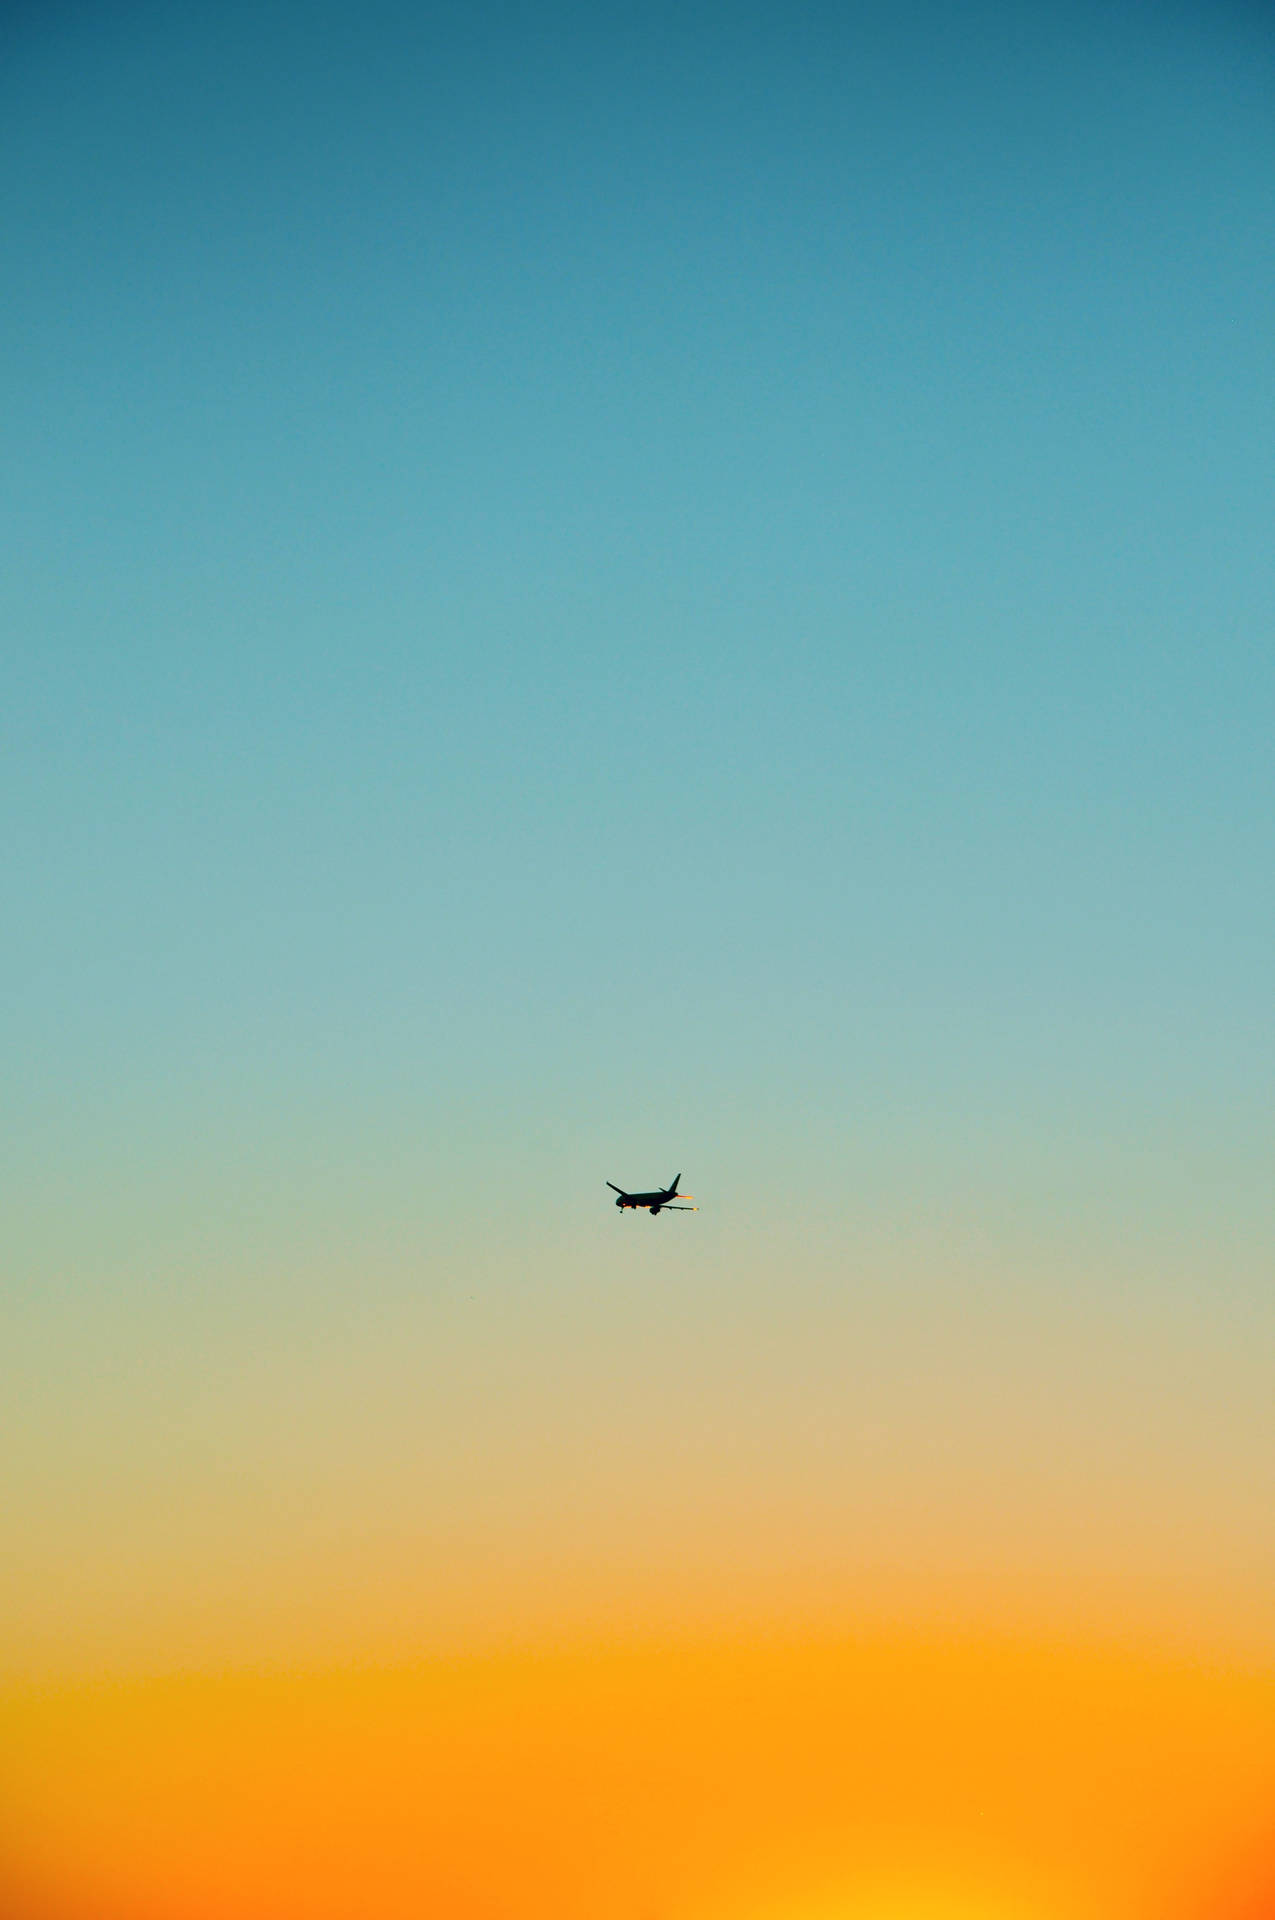 Iphonereise Flugzeug Ästhetik Sonnenuntergang Wallpaper